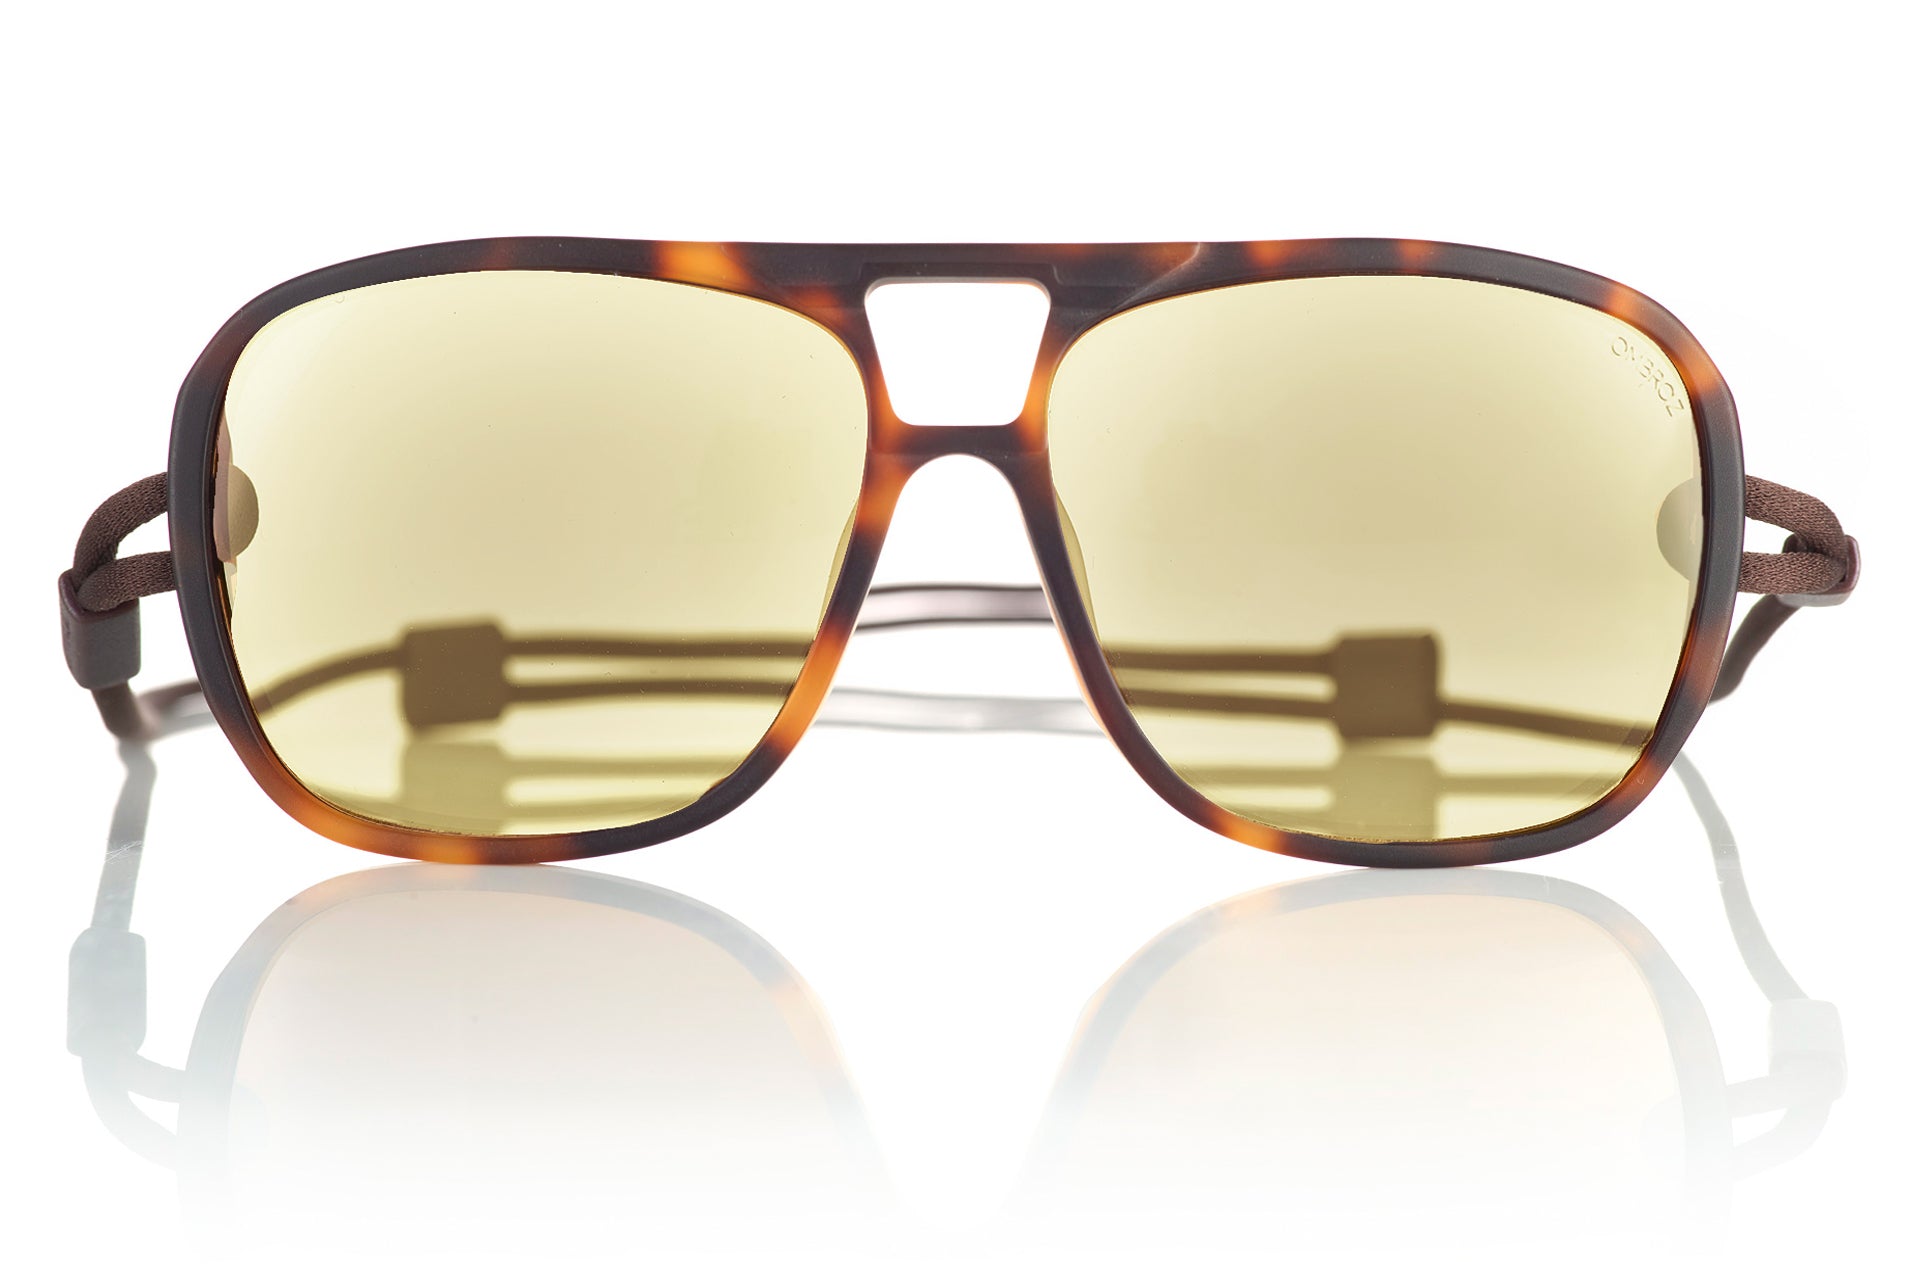 leggero_tortoise_blocker Close up of Ombraz leggero armless sunglasses with cord